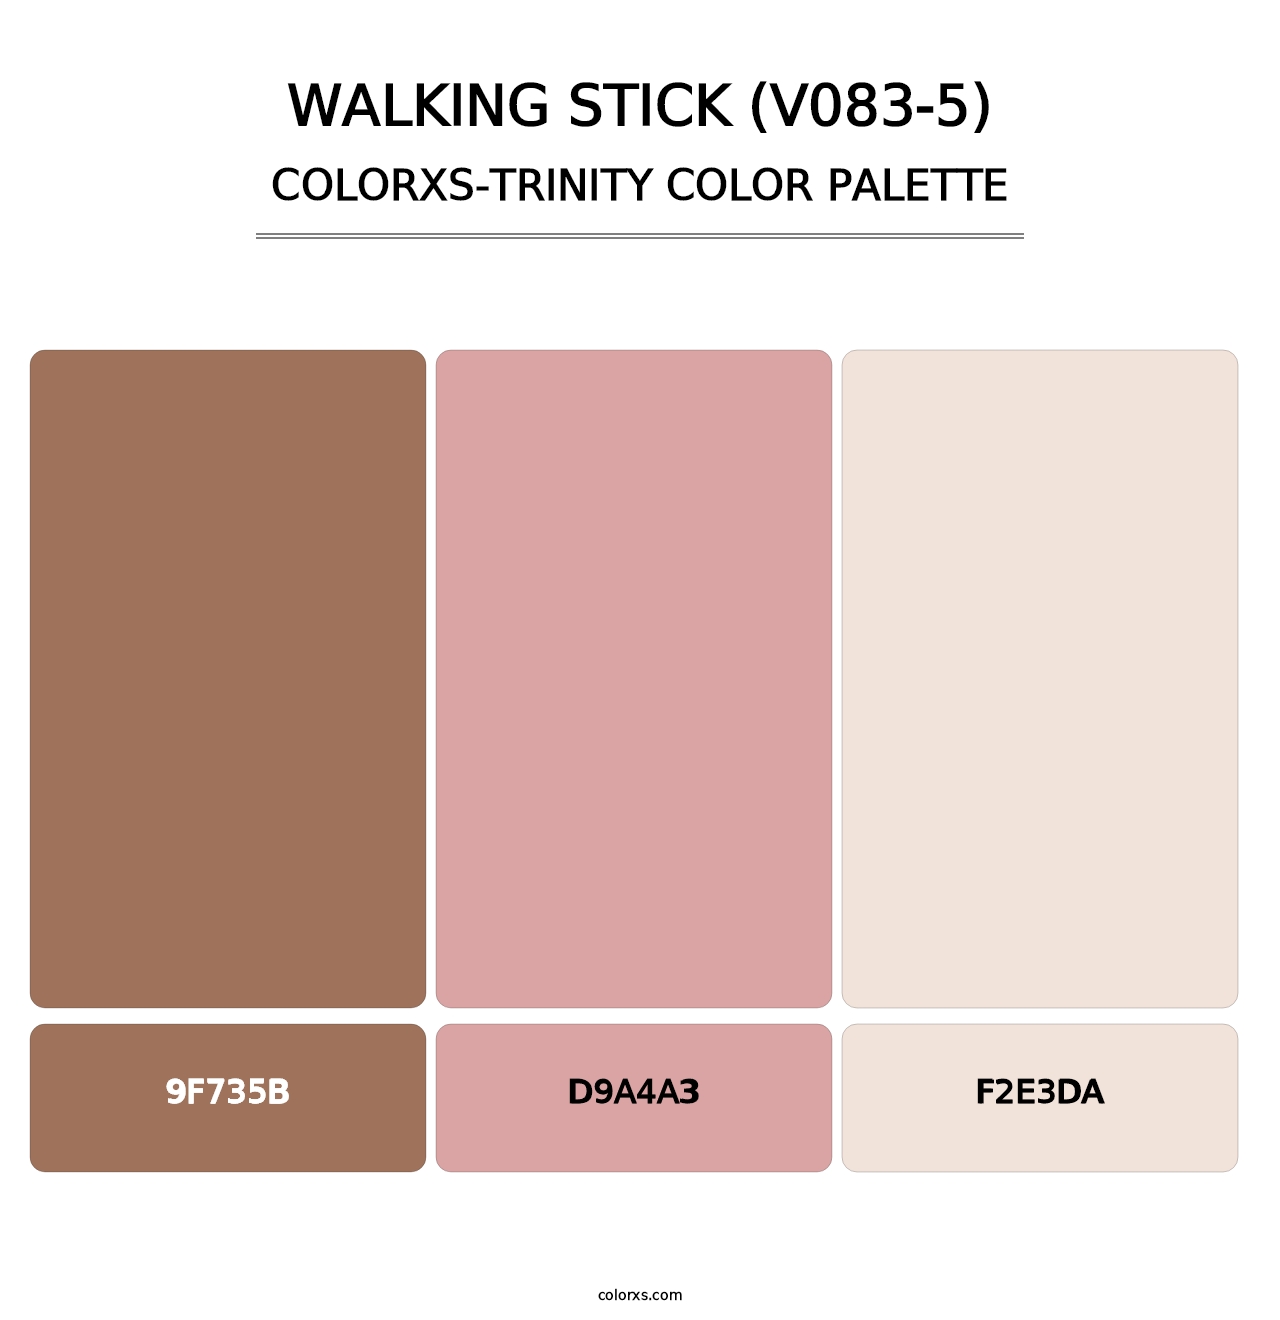 Walking Stick (V083-5) - Colorxs Trinity Palette